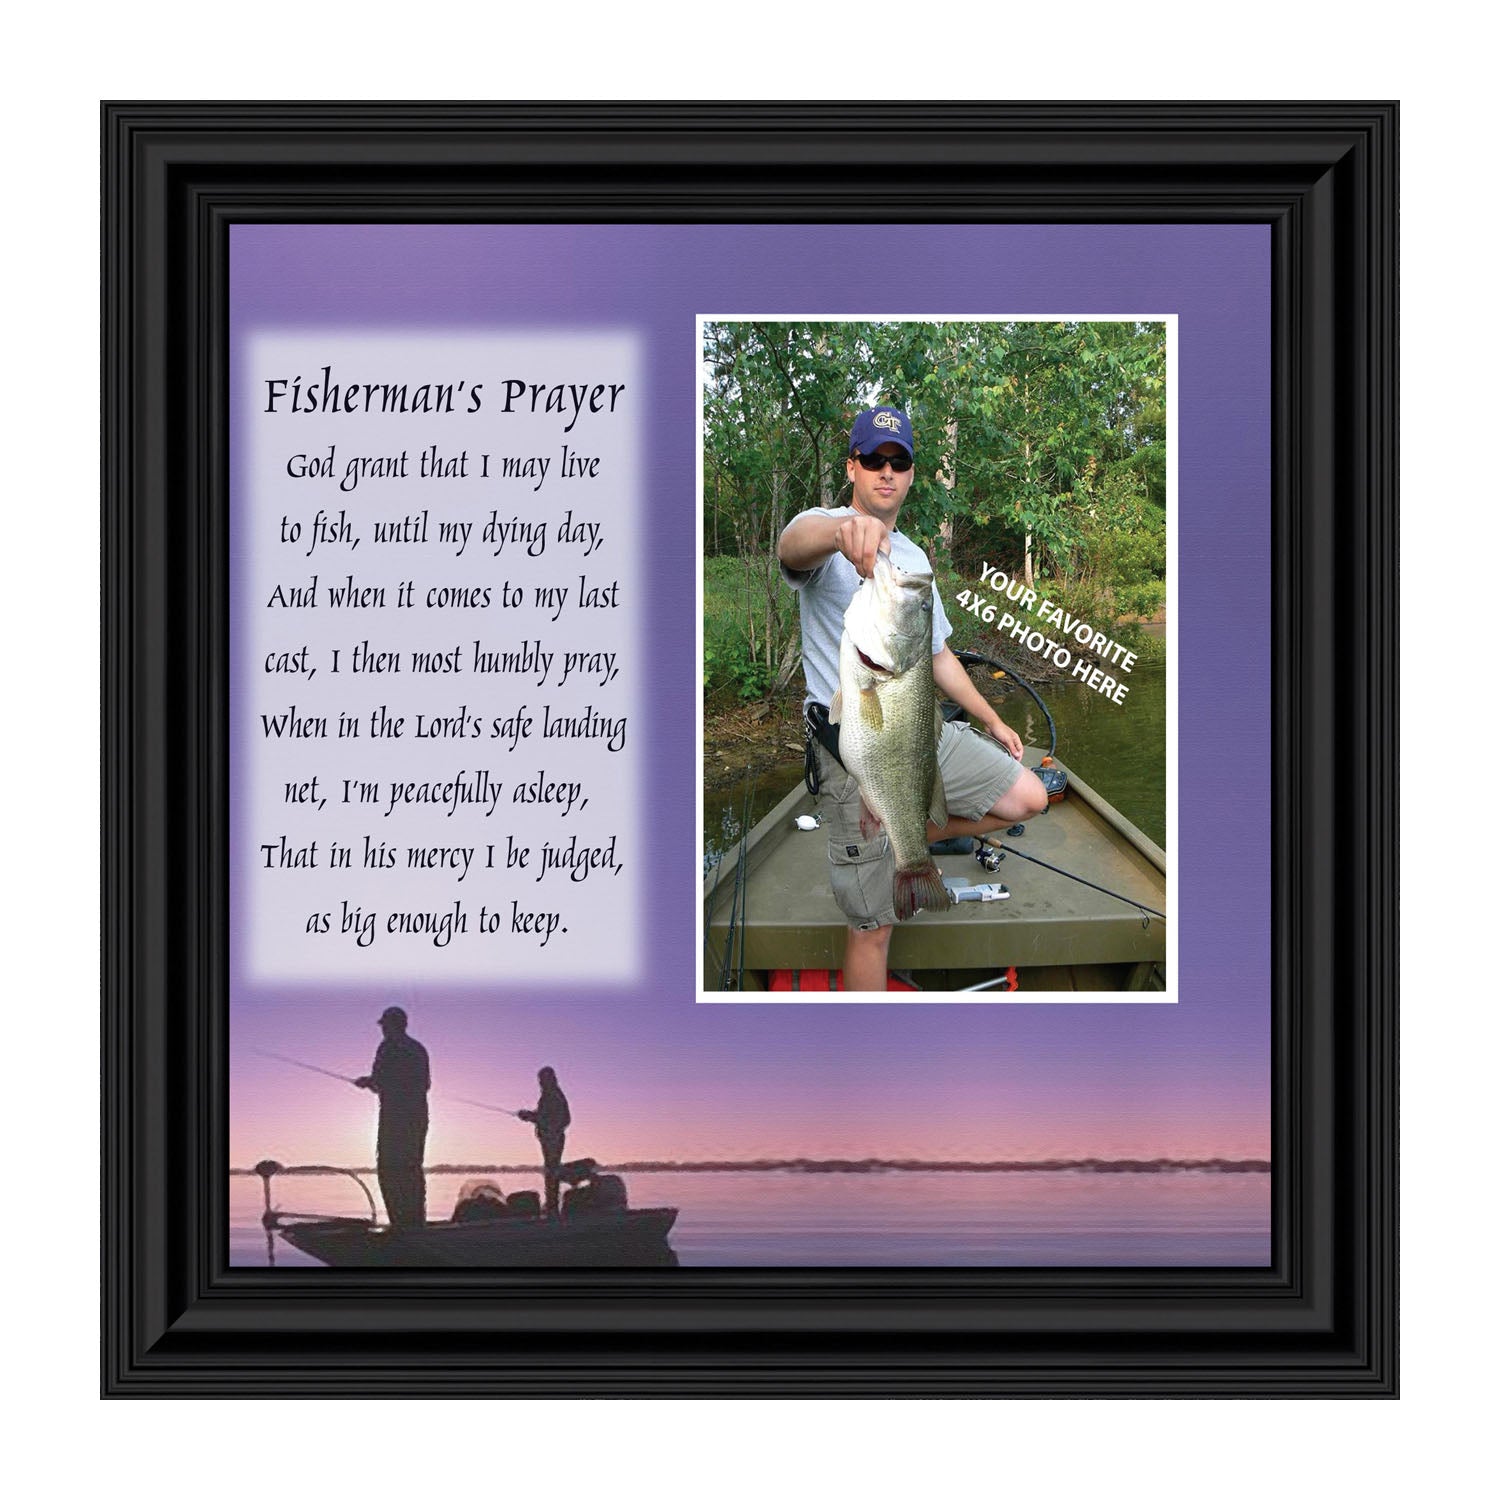 A Fisherman's Prayer, Fishing Gifts, Beach, Boating or Fishing